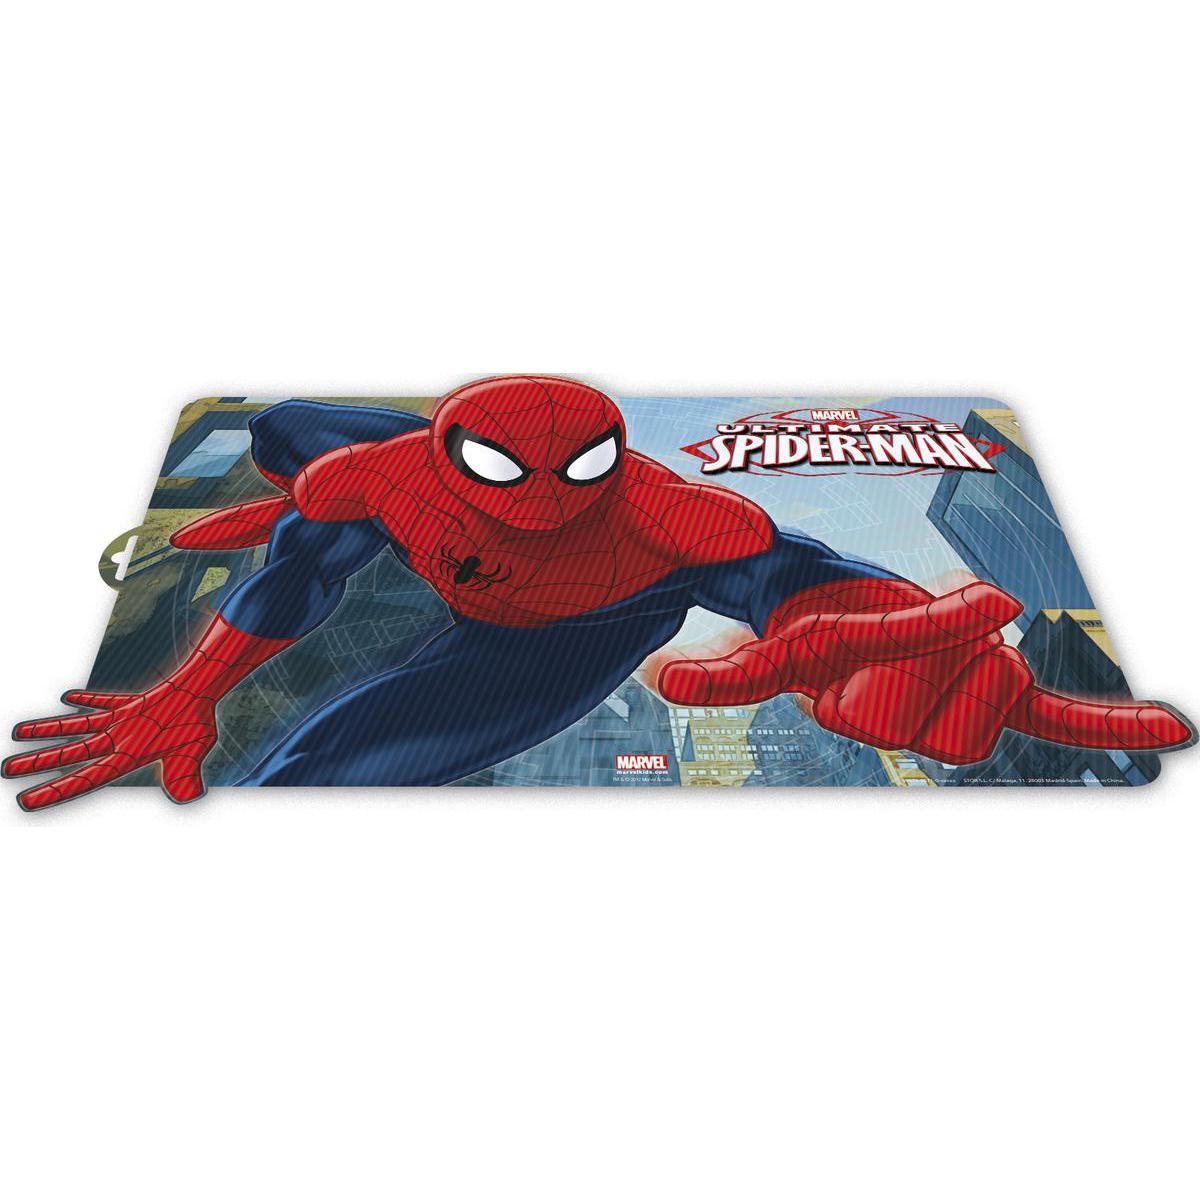 Set de table 3D Spider-man - Polypropylène - Multicolore